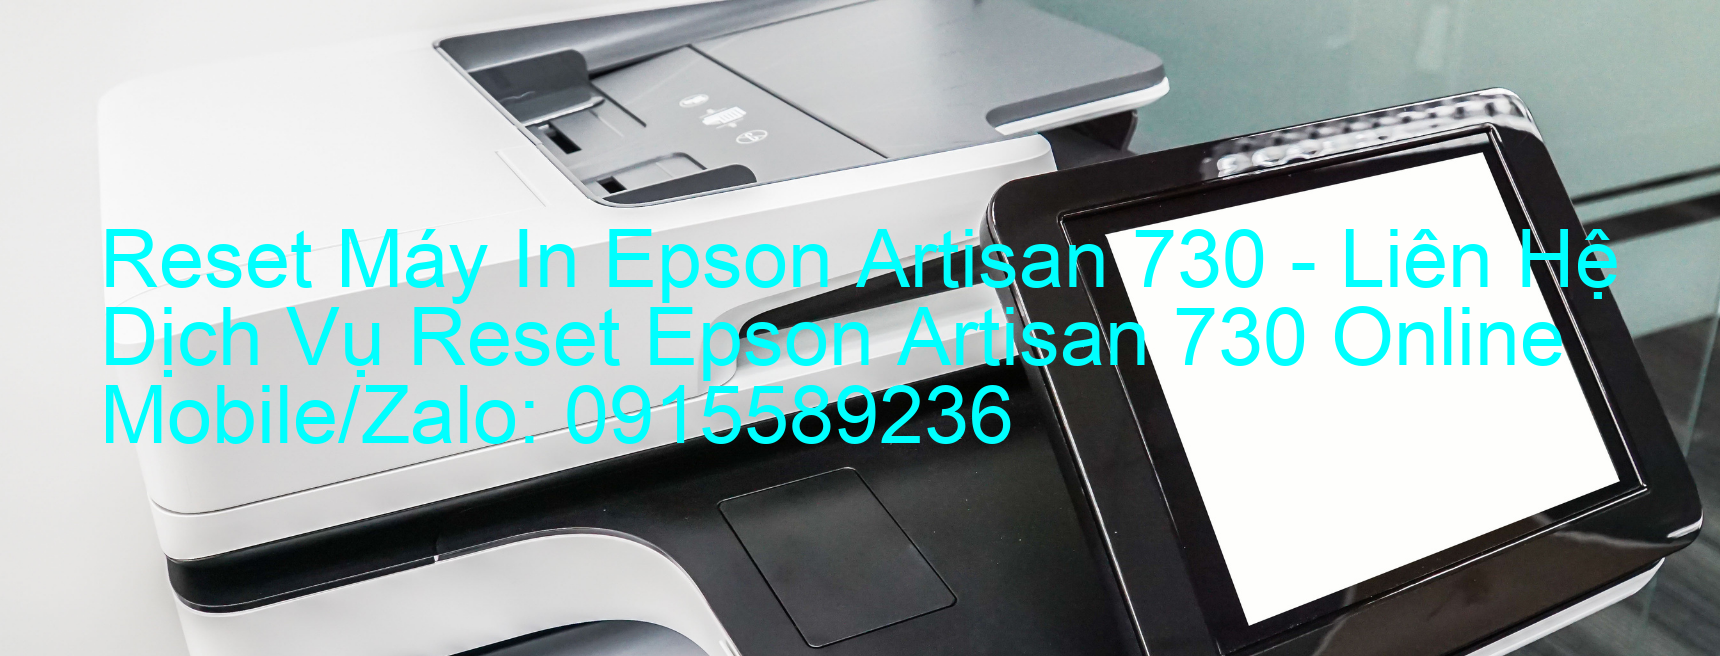 Reset Máy In Epson Artisan 730 Online